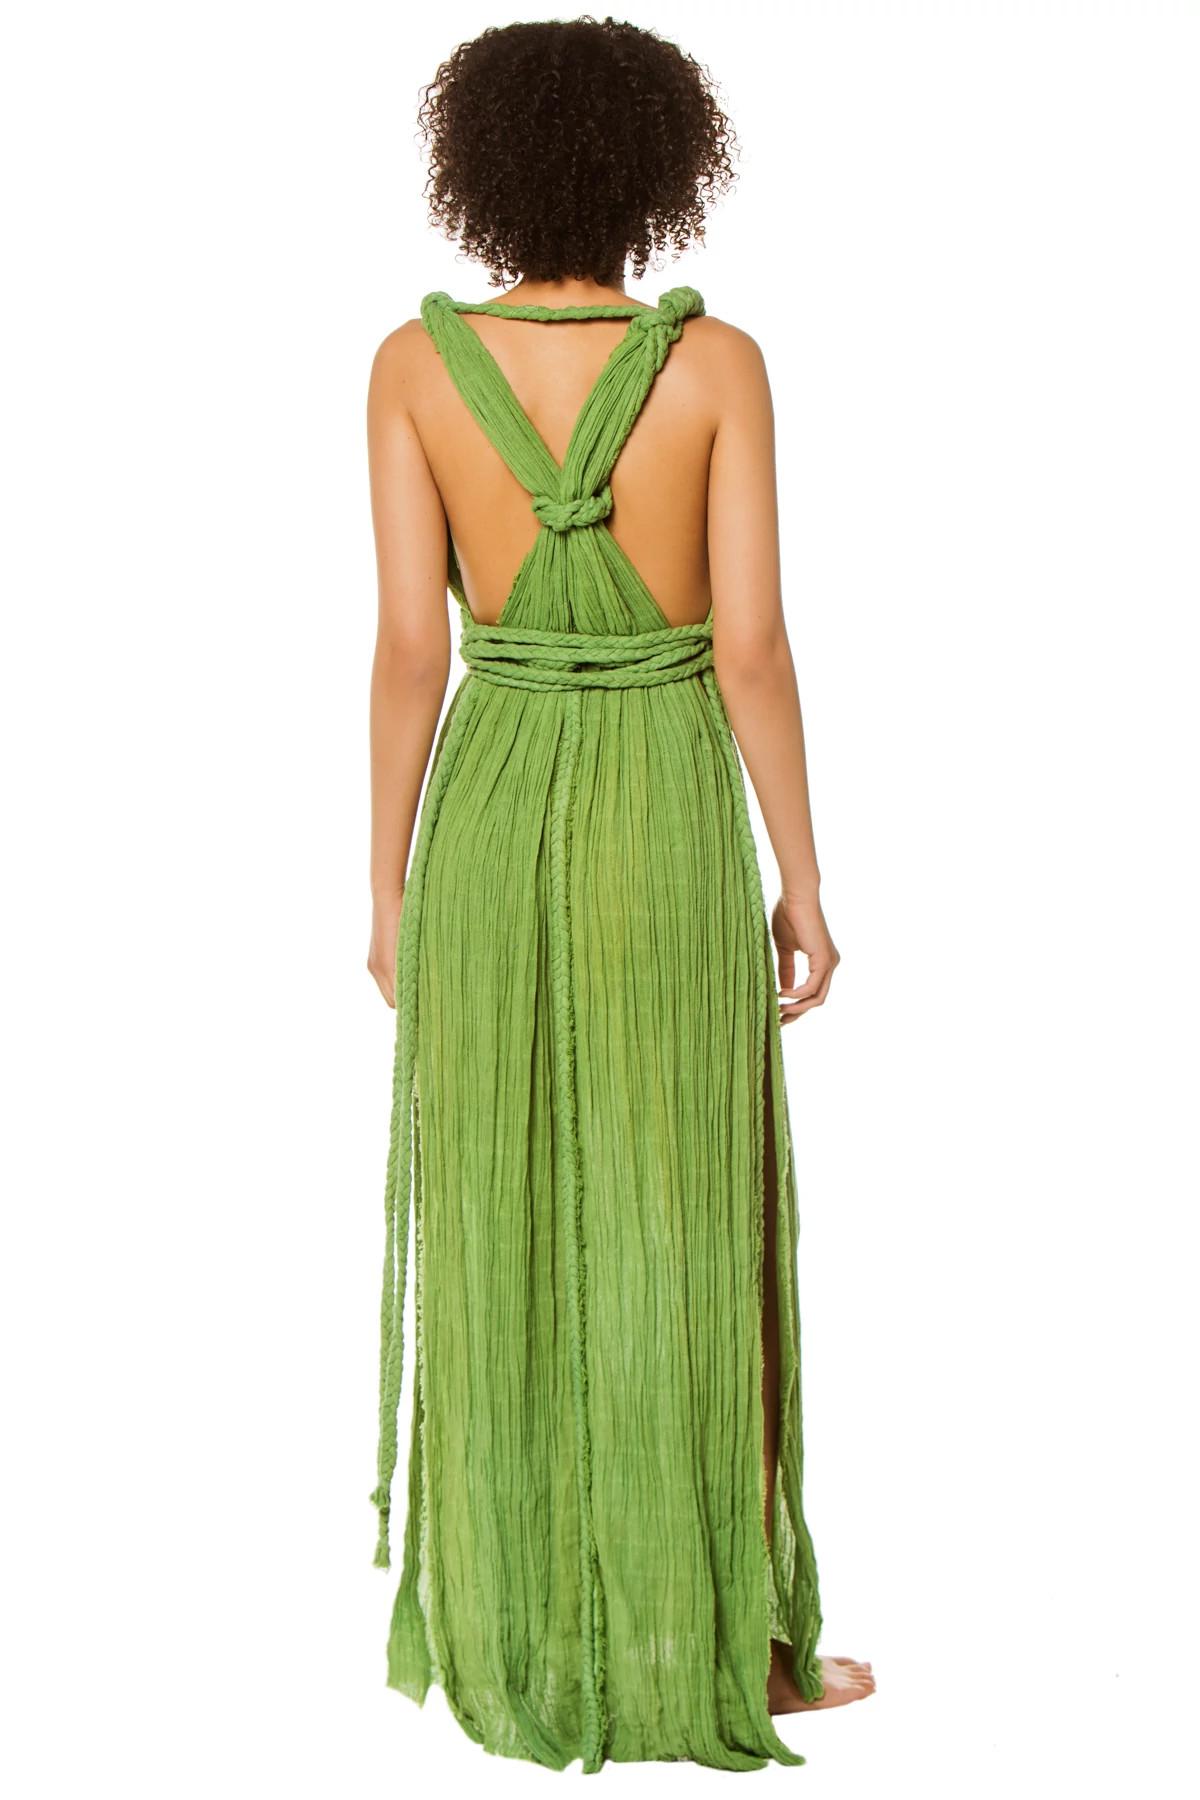 SELVA Selena Full Length Harness Gown image number 2